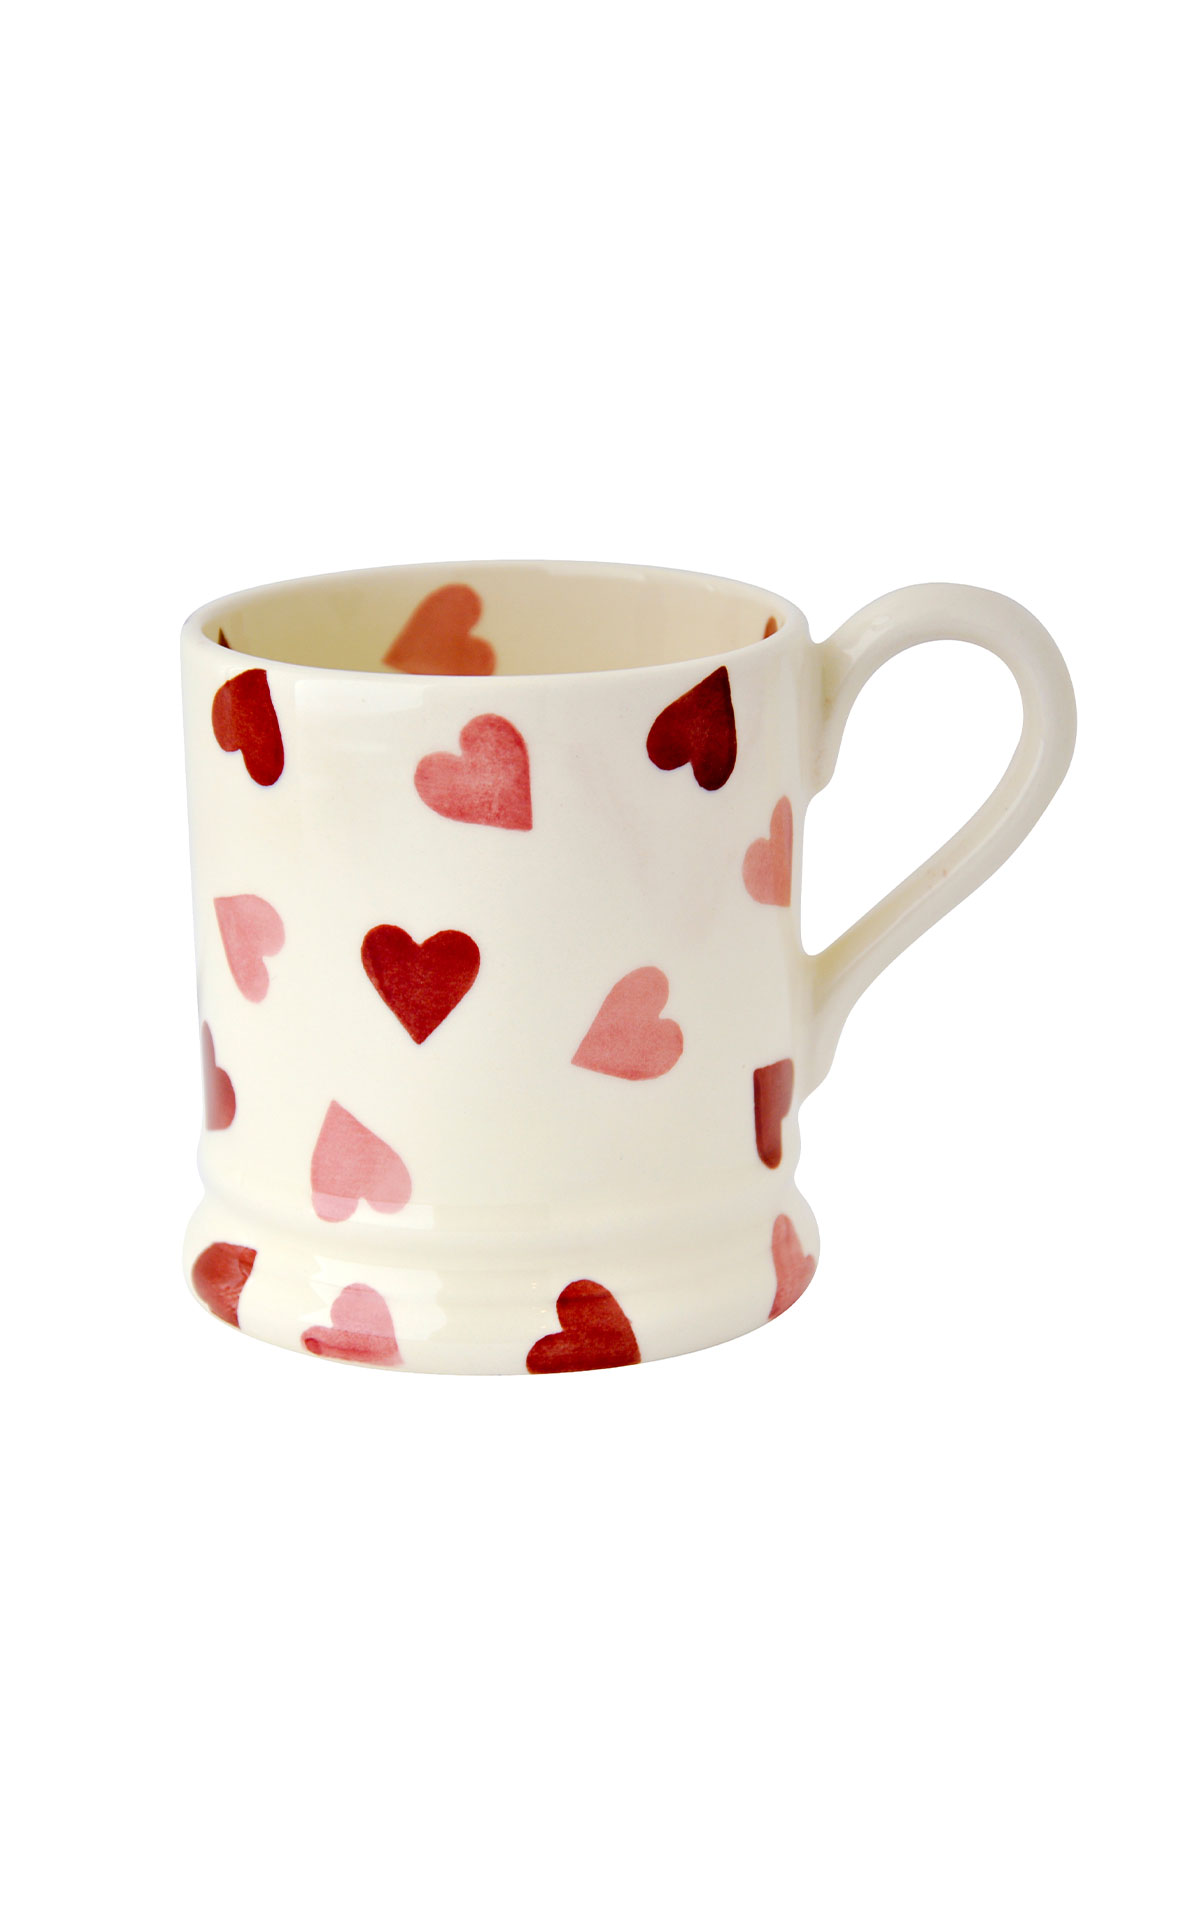 Emma Bridgewater Pink hearts half pint mug from Bicester Village